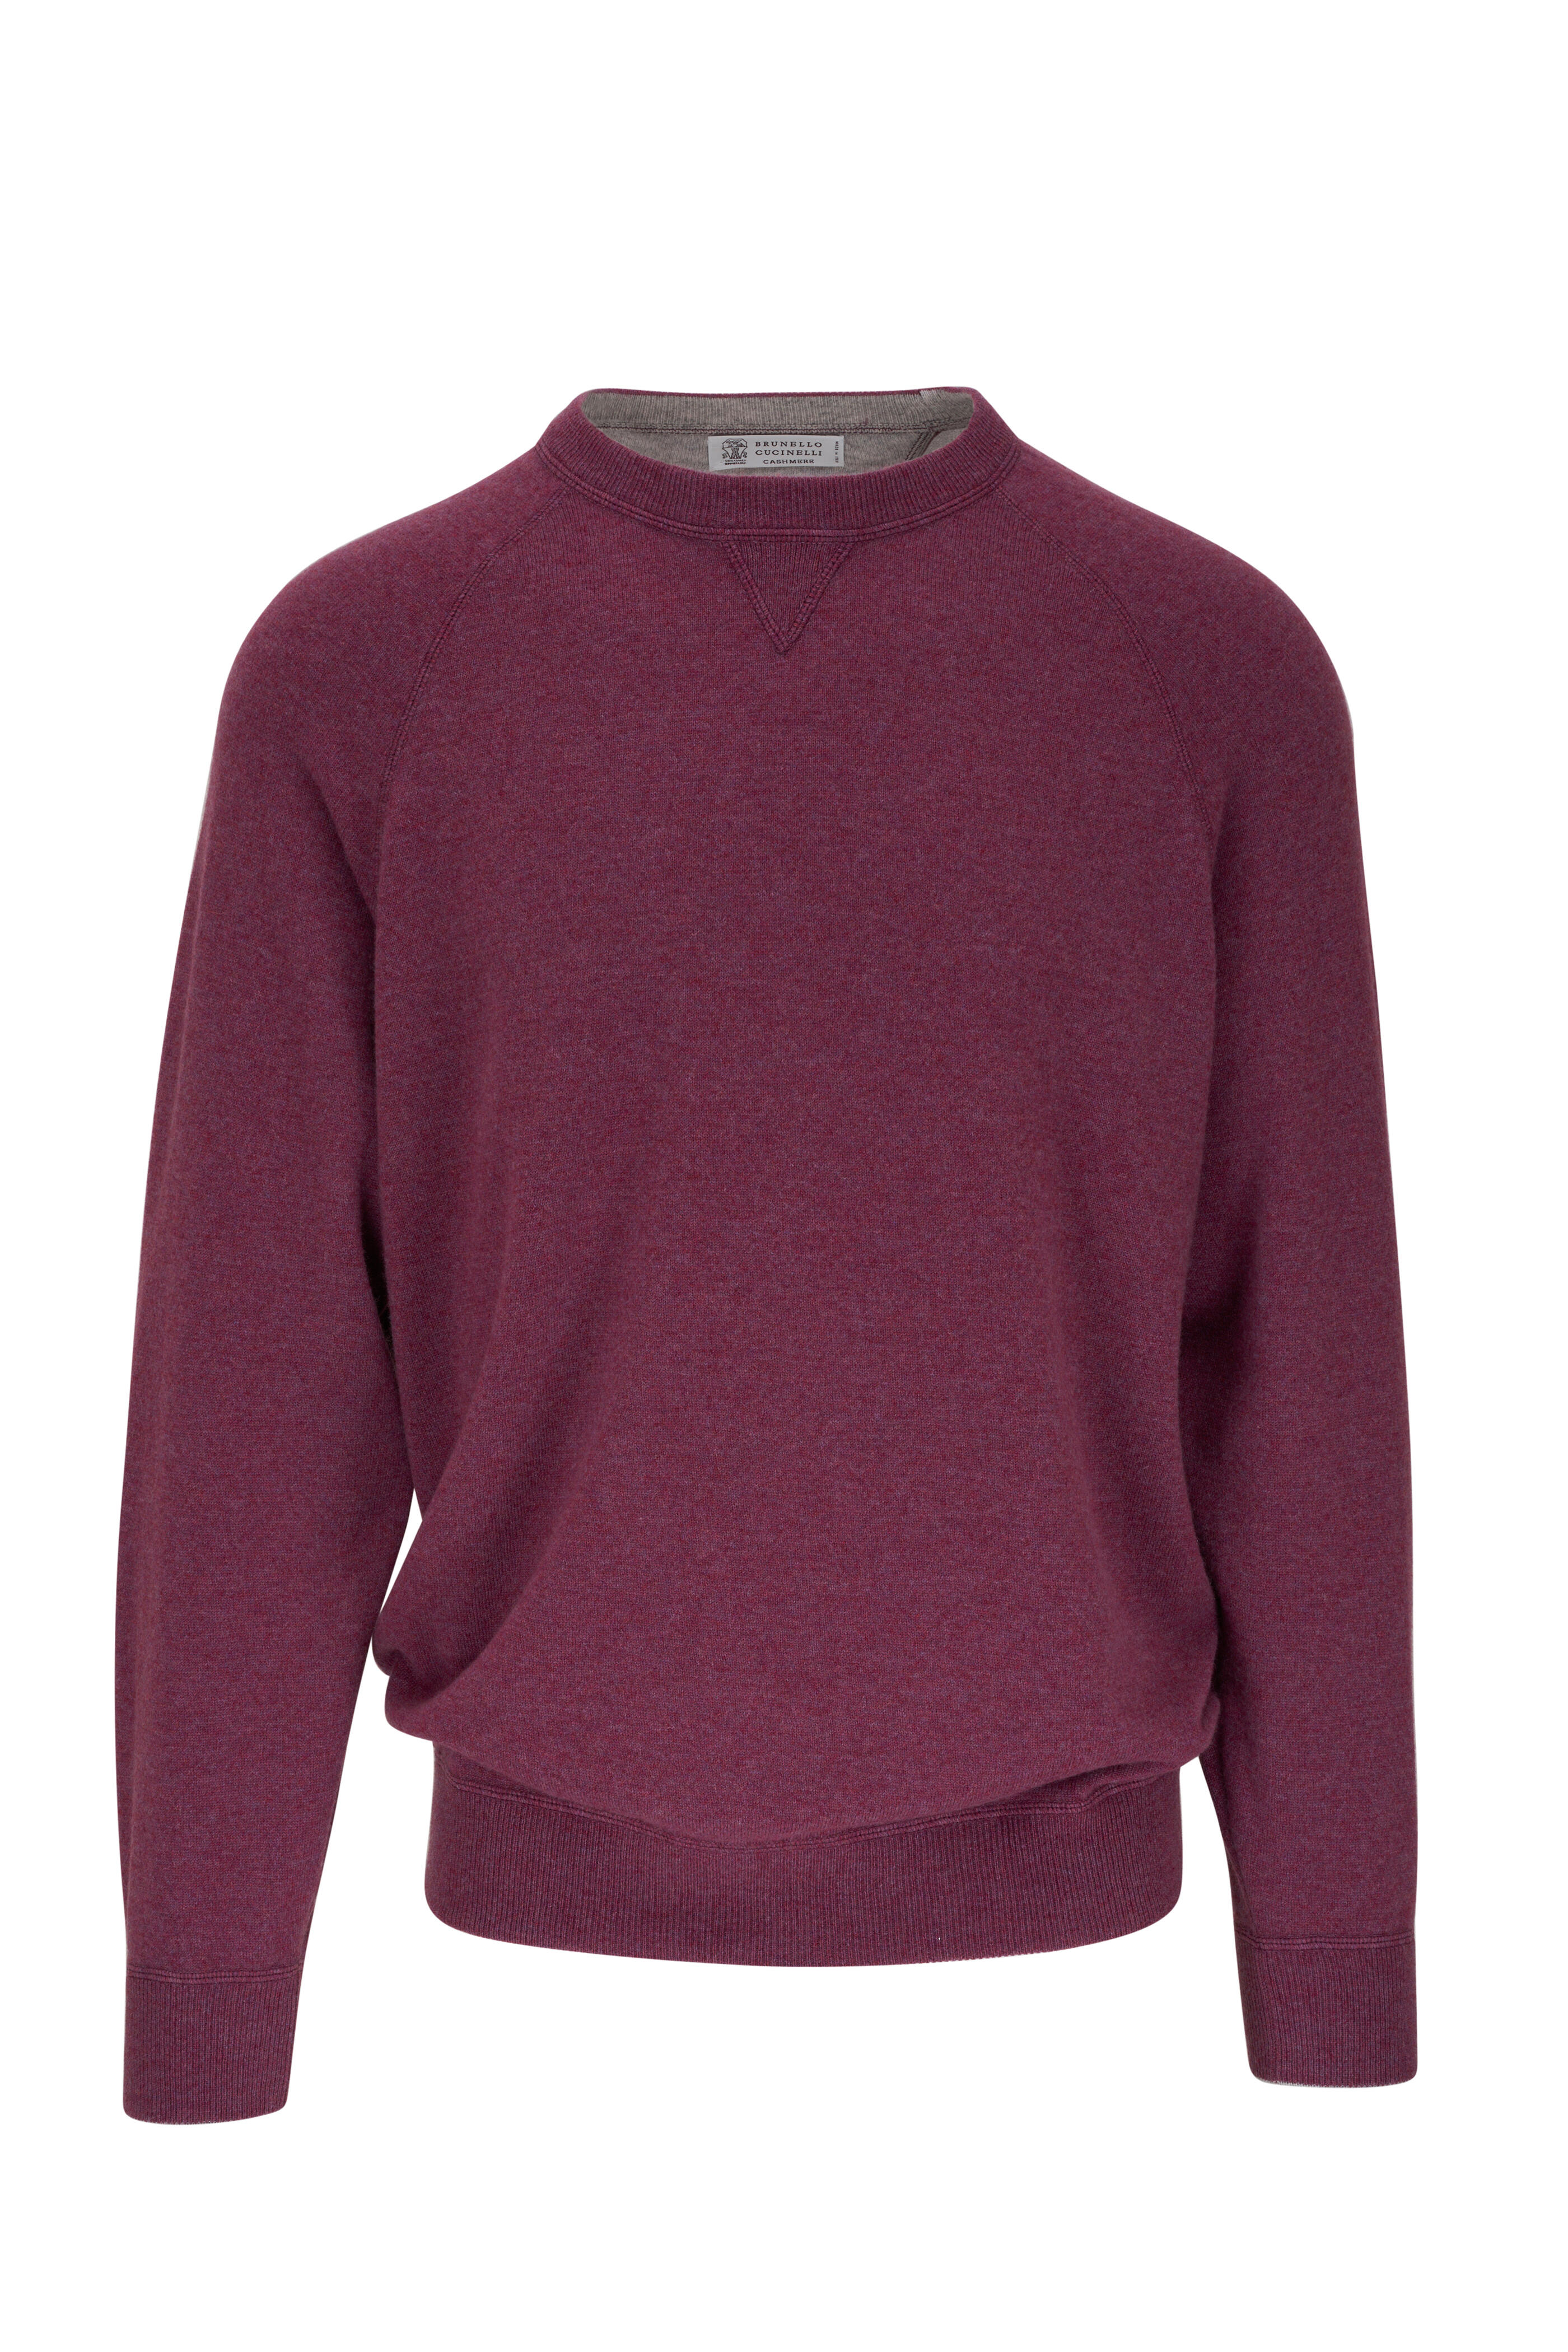 Brunello Cucinelli - Grape Cashmere Crewneck Sweater